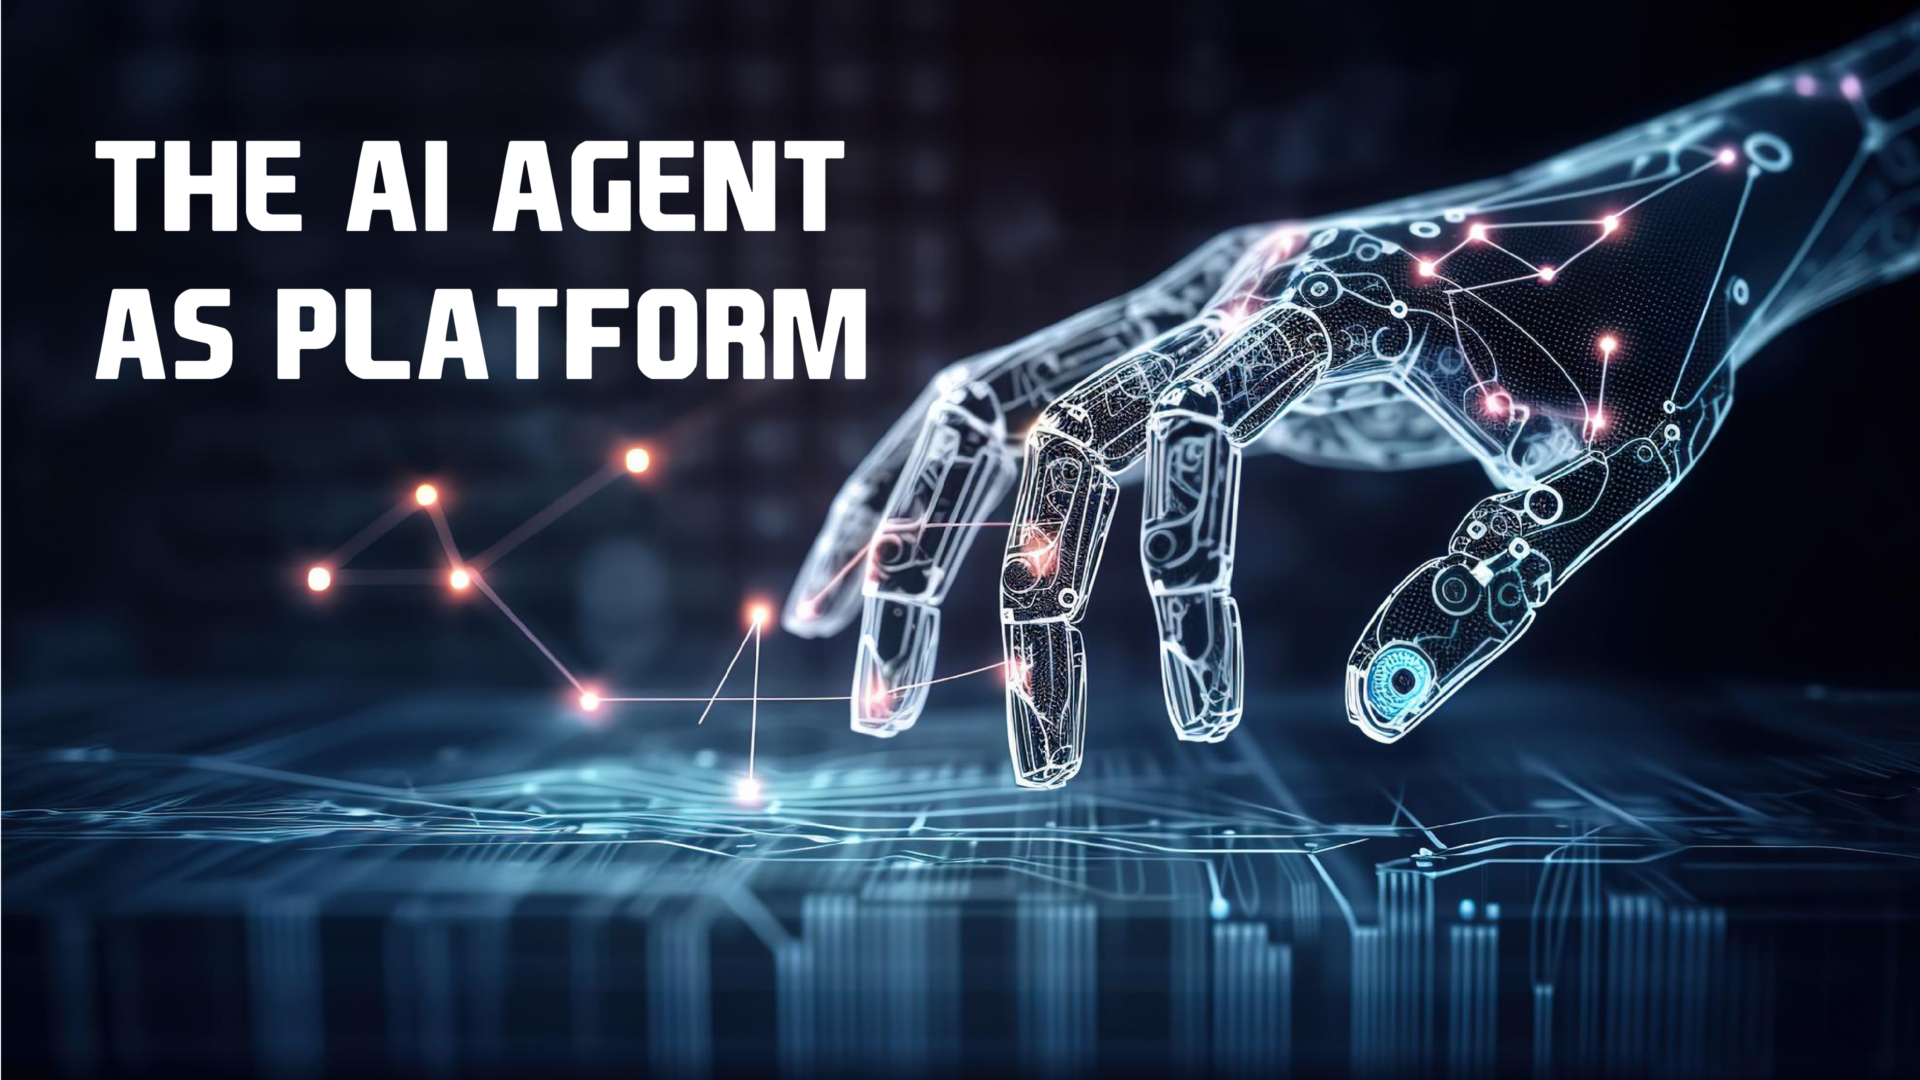 What’s Next for AI: AI Agent as Platform